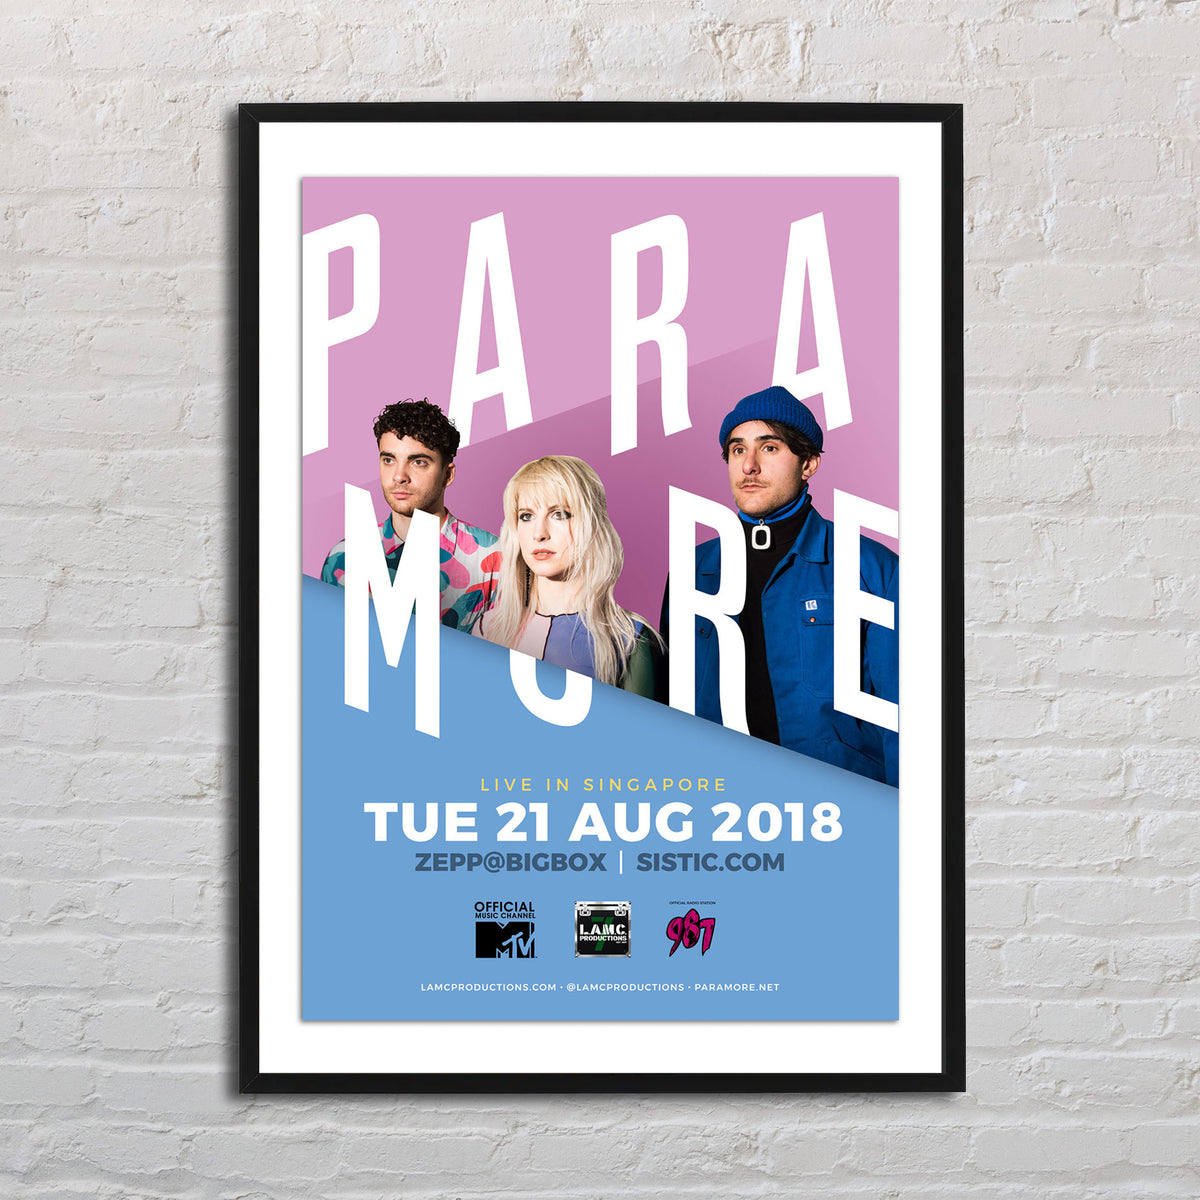 Paramore - Official Shop